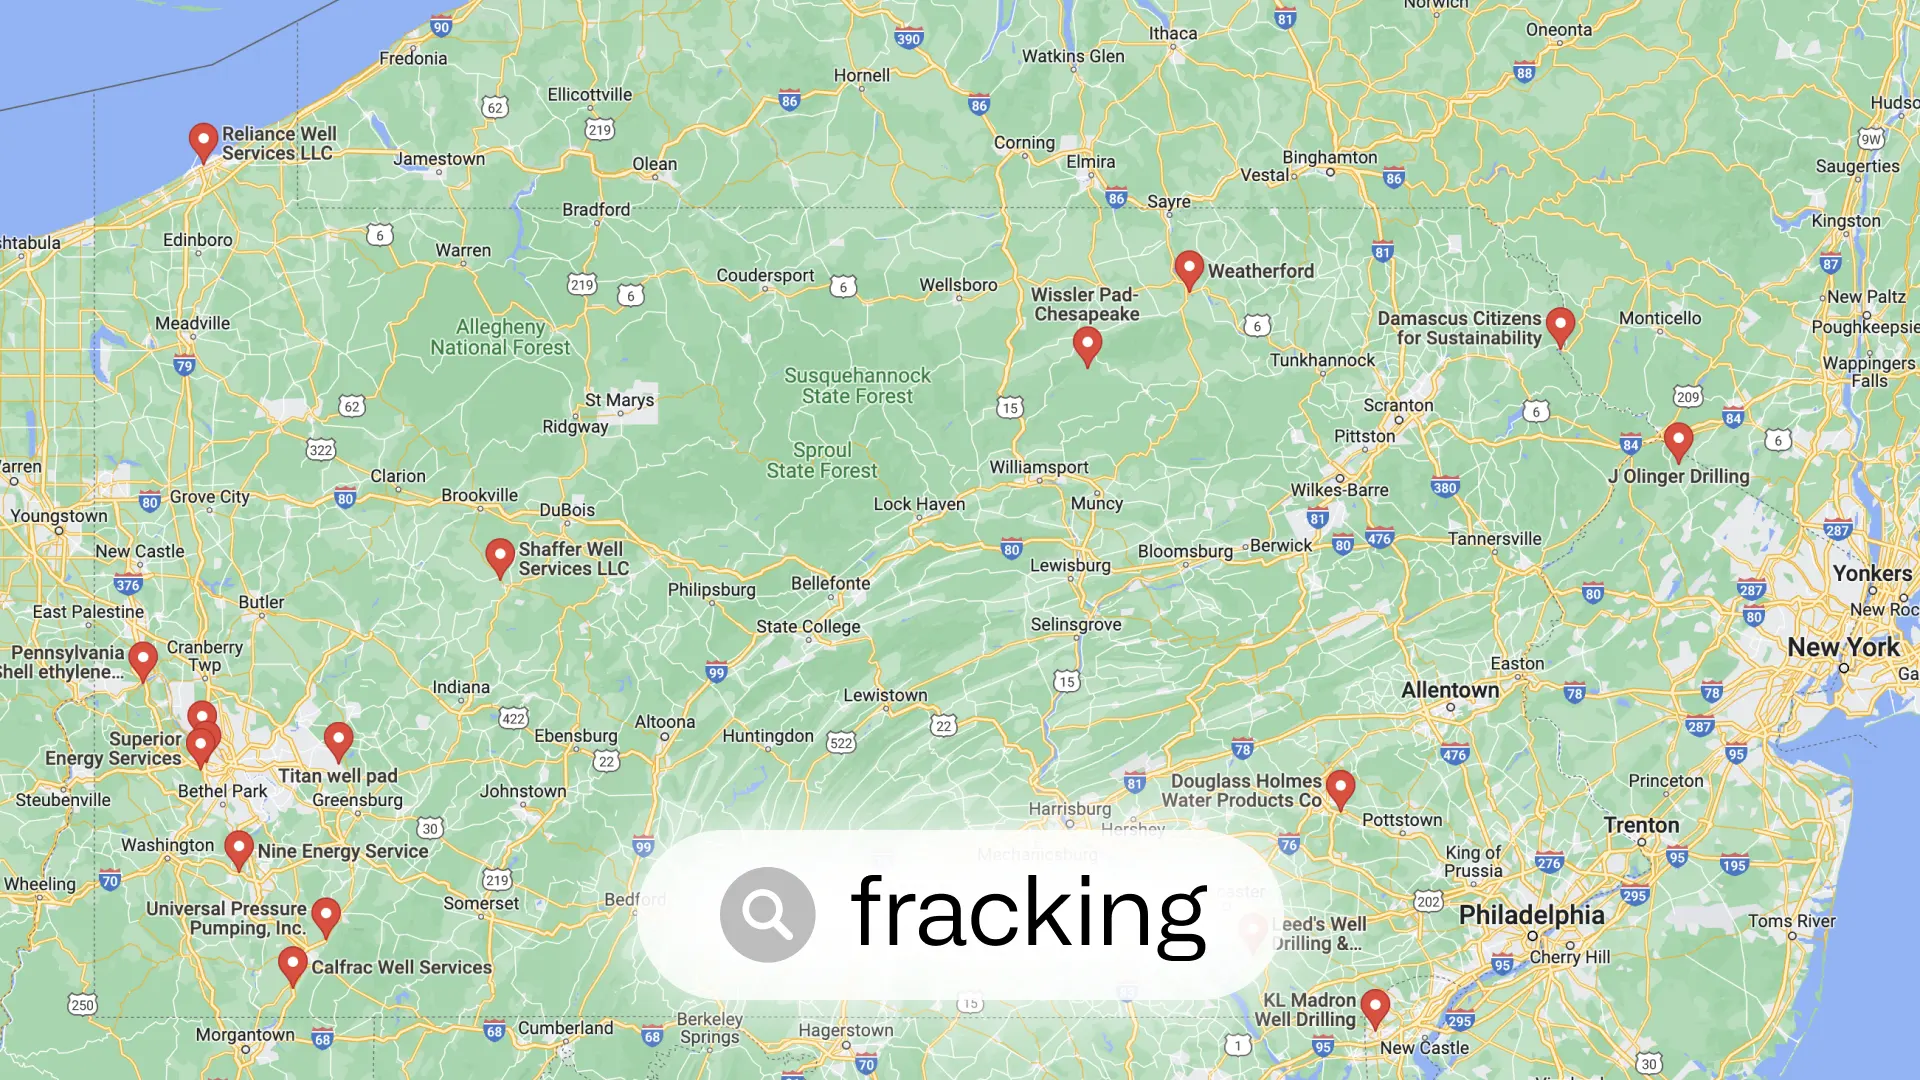 Google Maps results for “fracking”